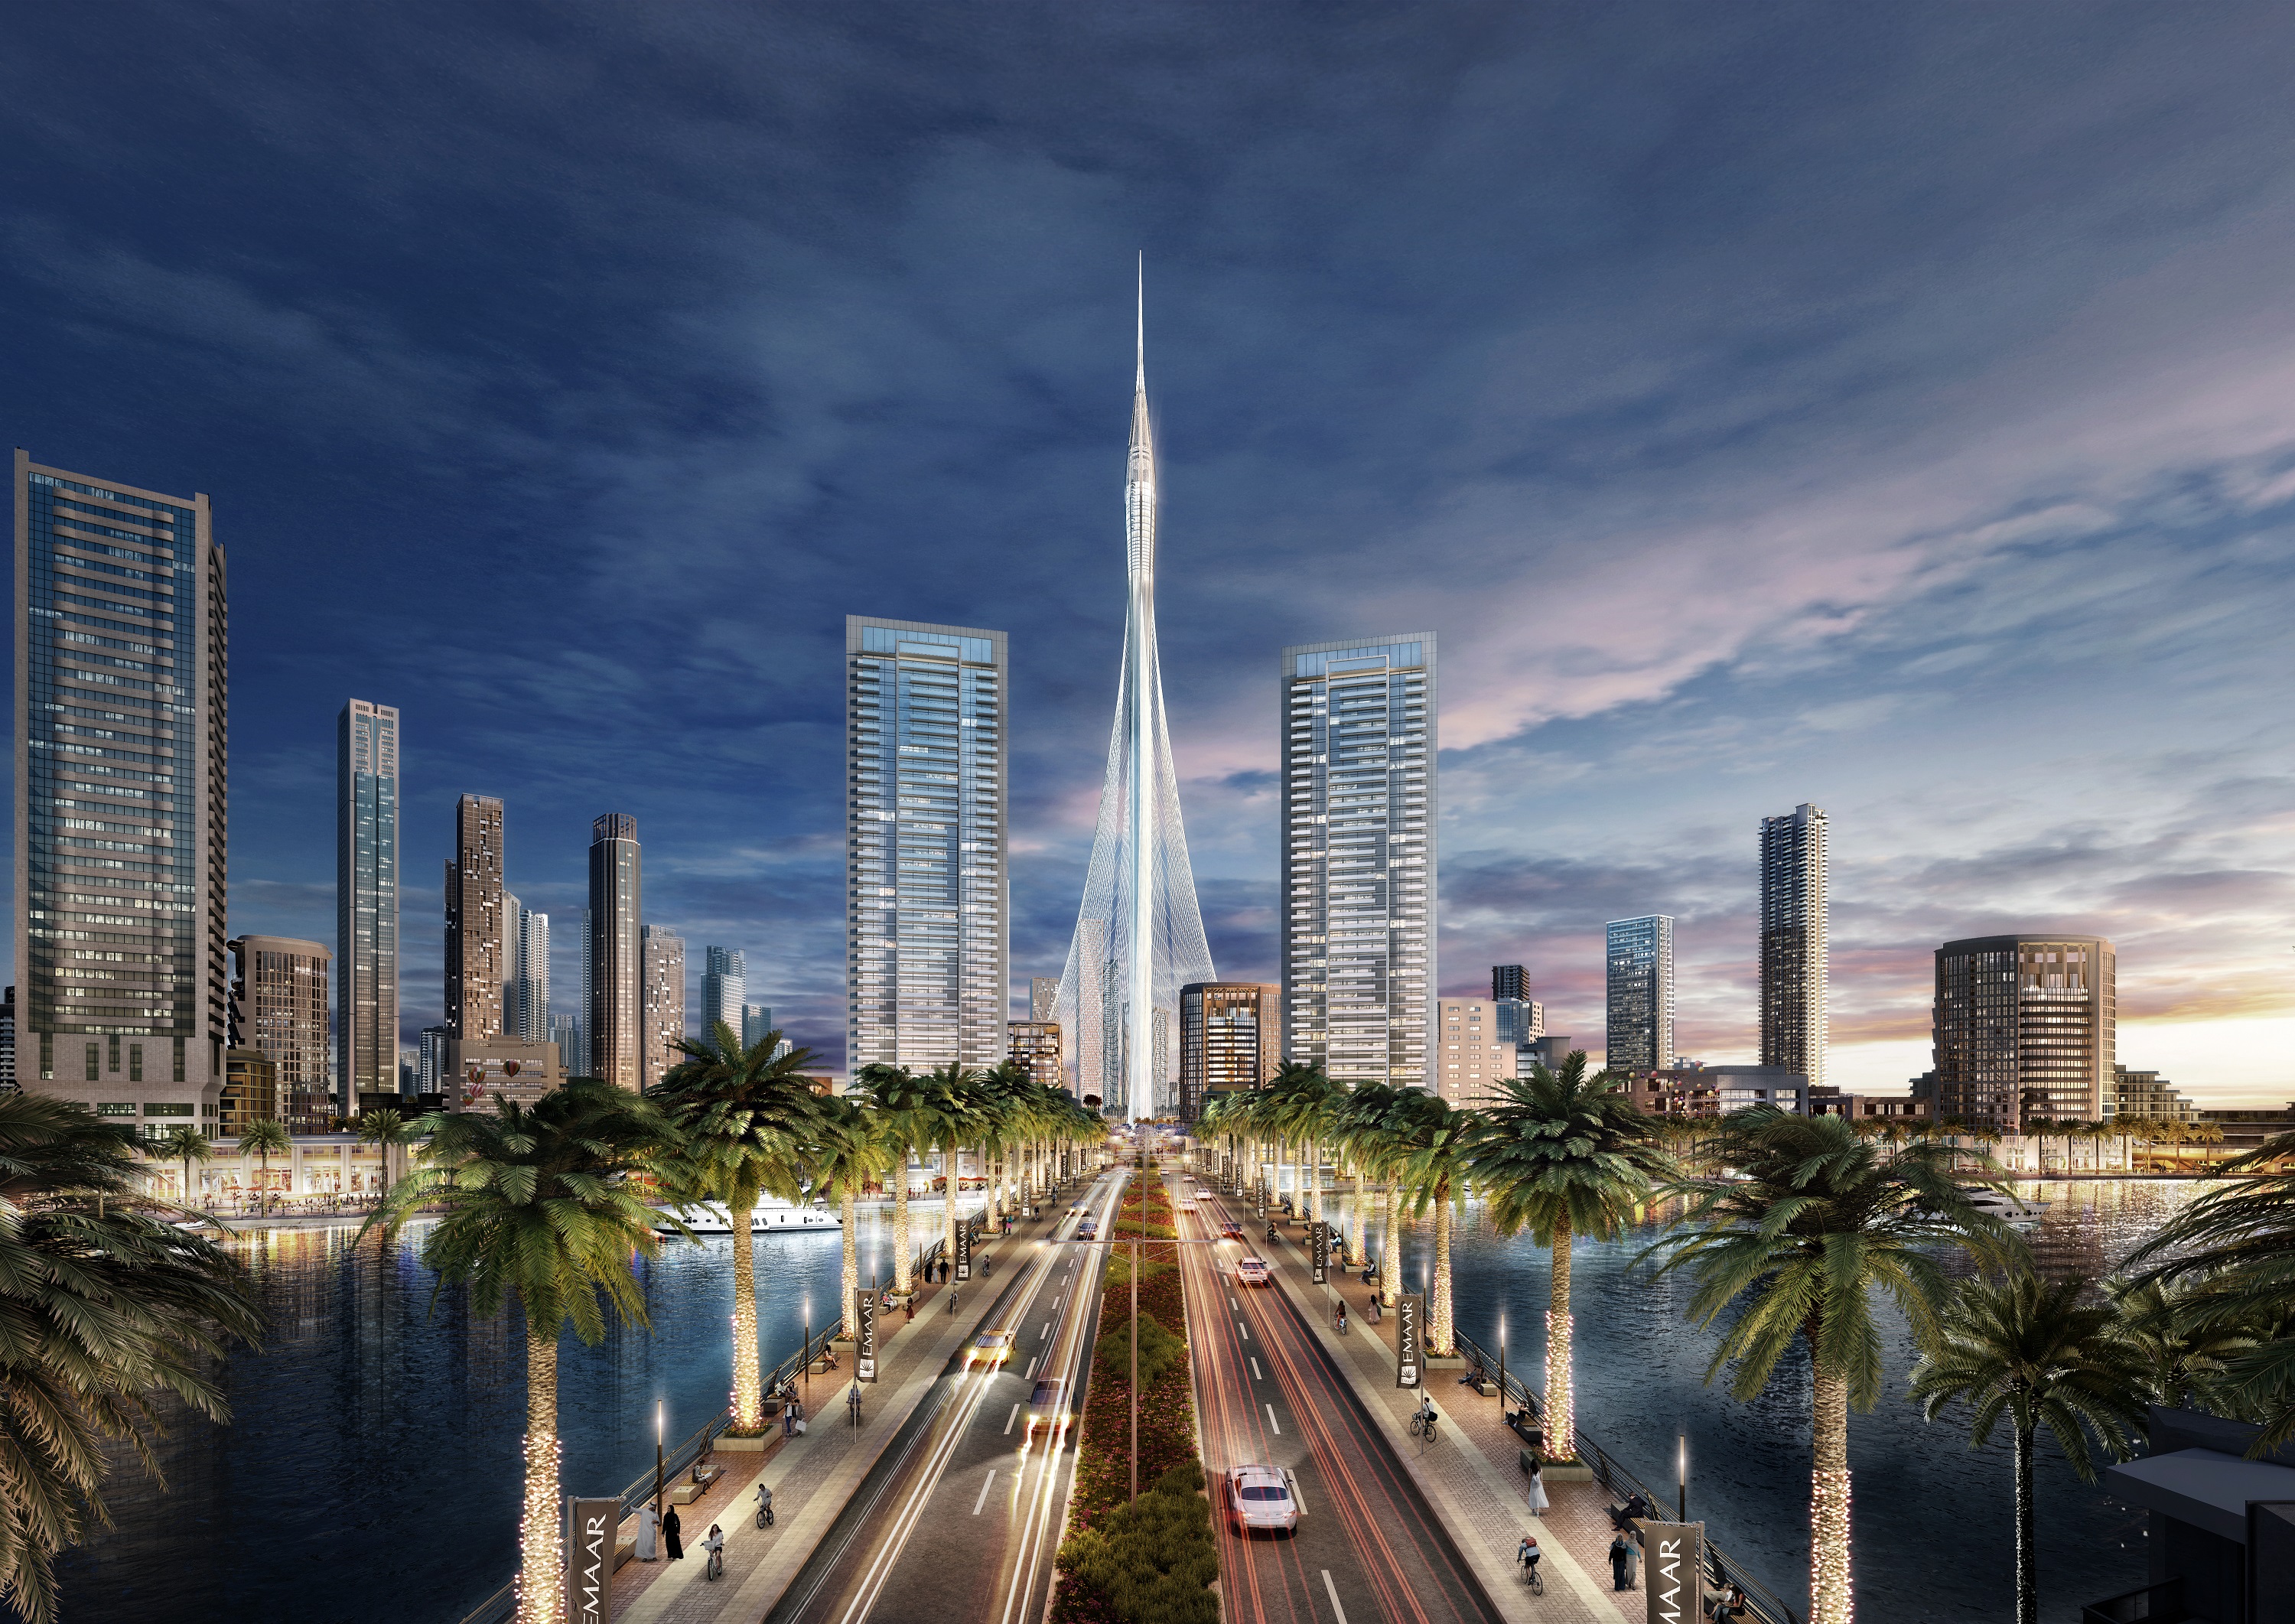 More information about "Αναβολή λόγω πανδημίας ο αγώνας μεταξύ Ηνωμένων Αραβικών Εμιράτων και Σαουδικής Αραβίας για το υψηλότερο κτίριο στον κόσμο"